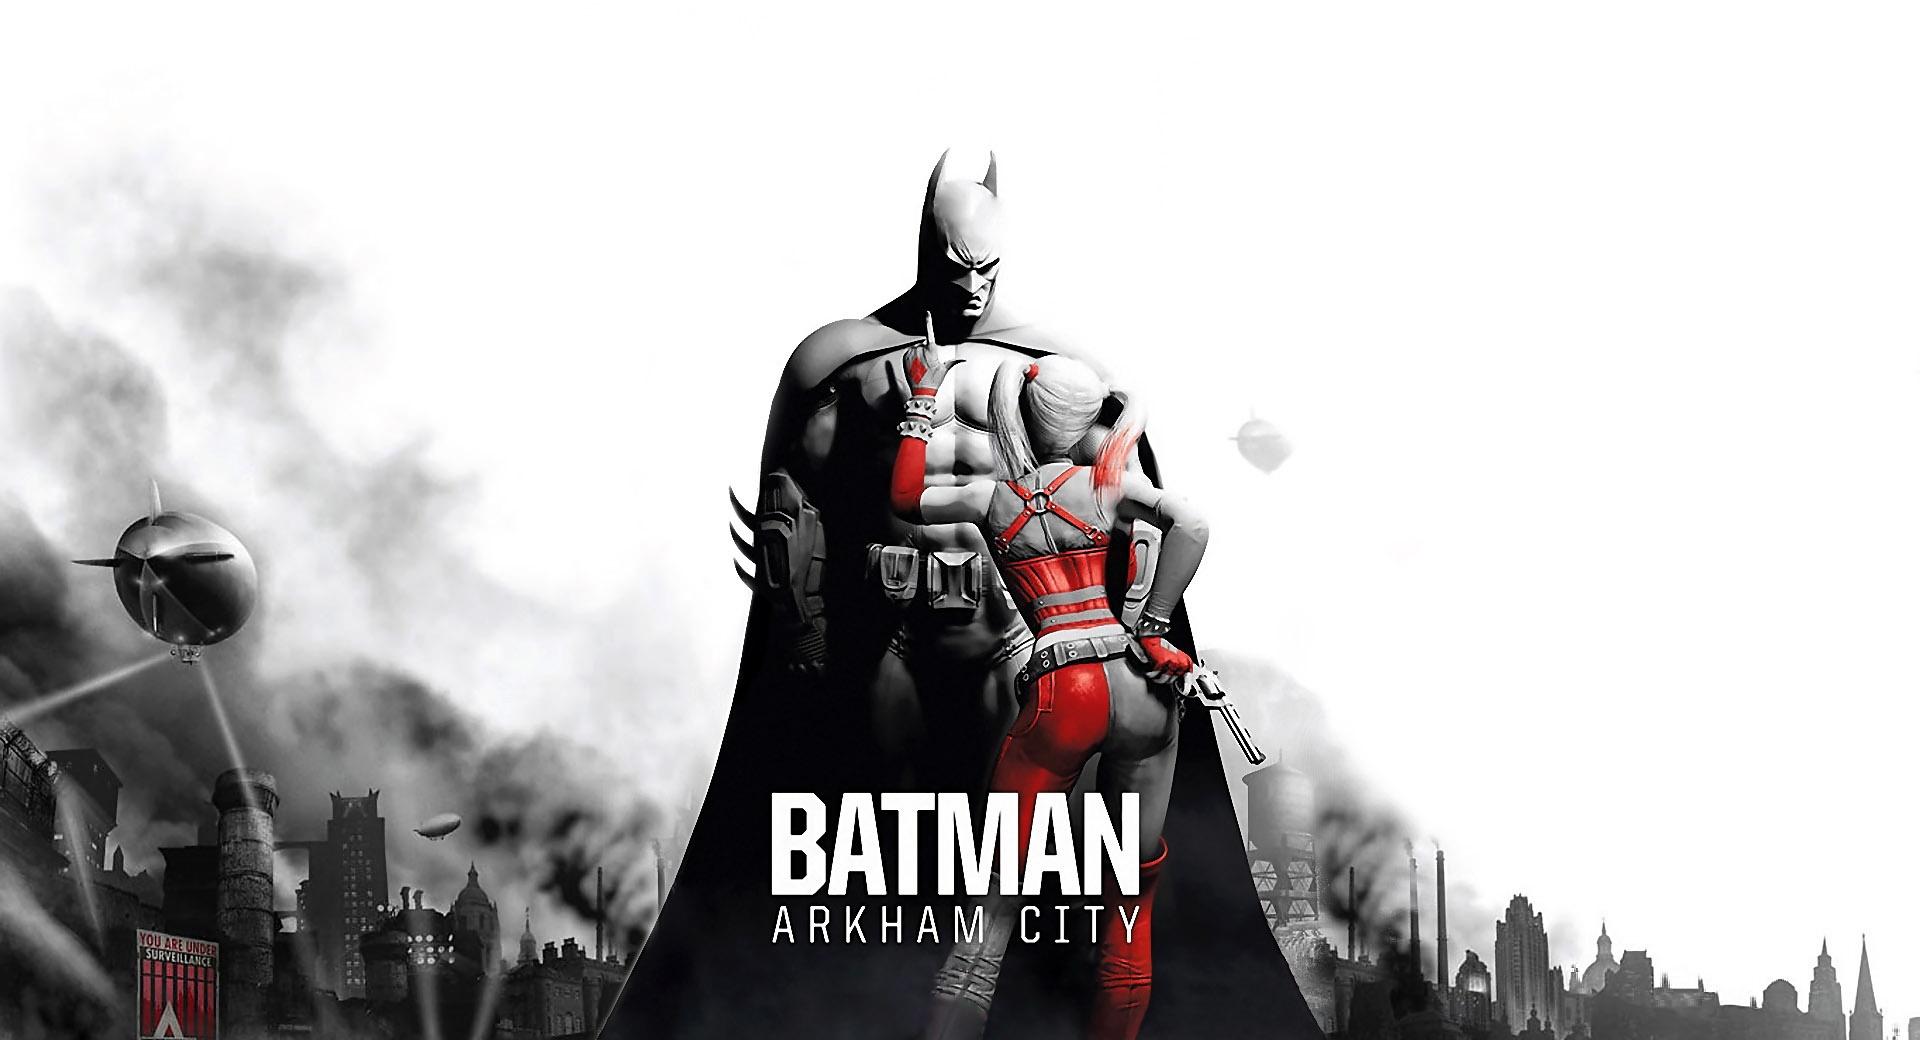 Batman Arkham City - Batman Harley at 2048 x 2048 iPad size wallpapers HD quality